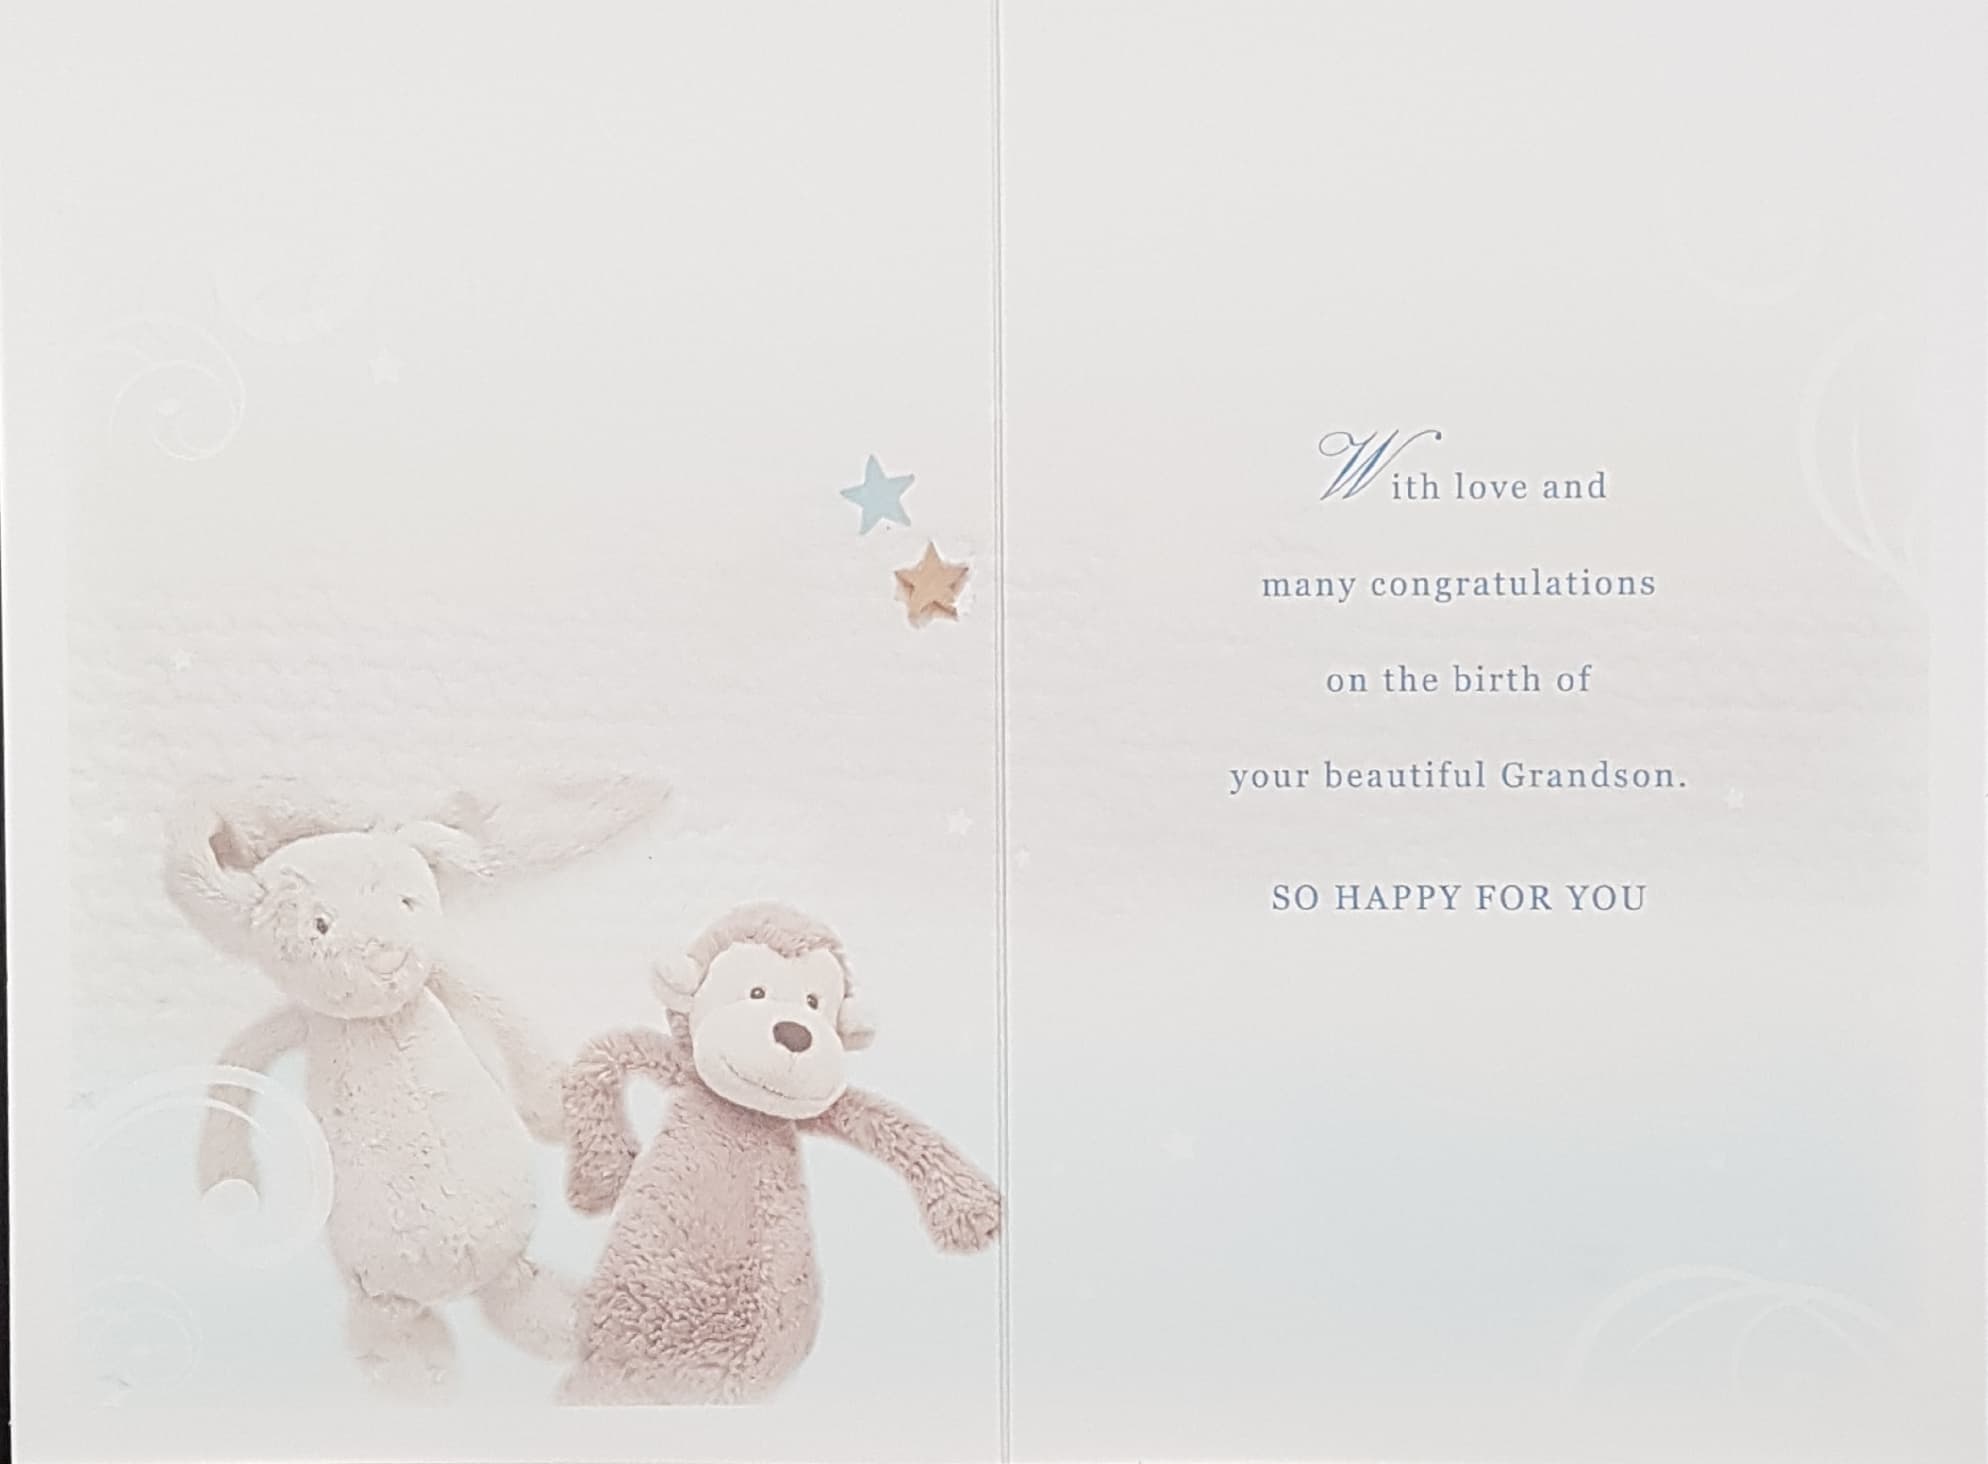 New Baby Card - Boy (Grandson) / Soft Toys Bunny & Monkey Holding Hands